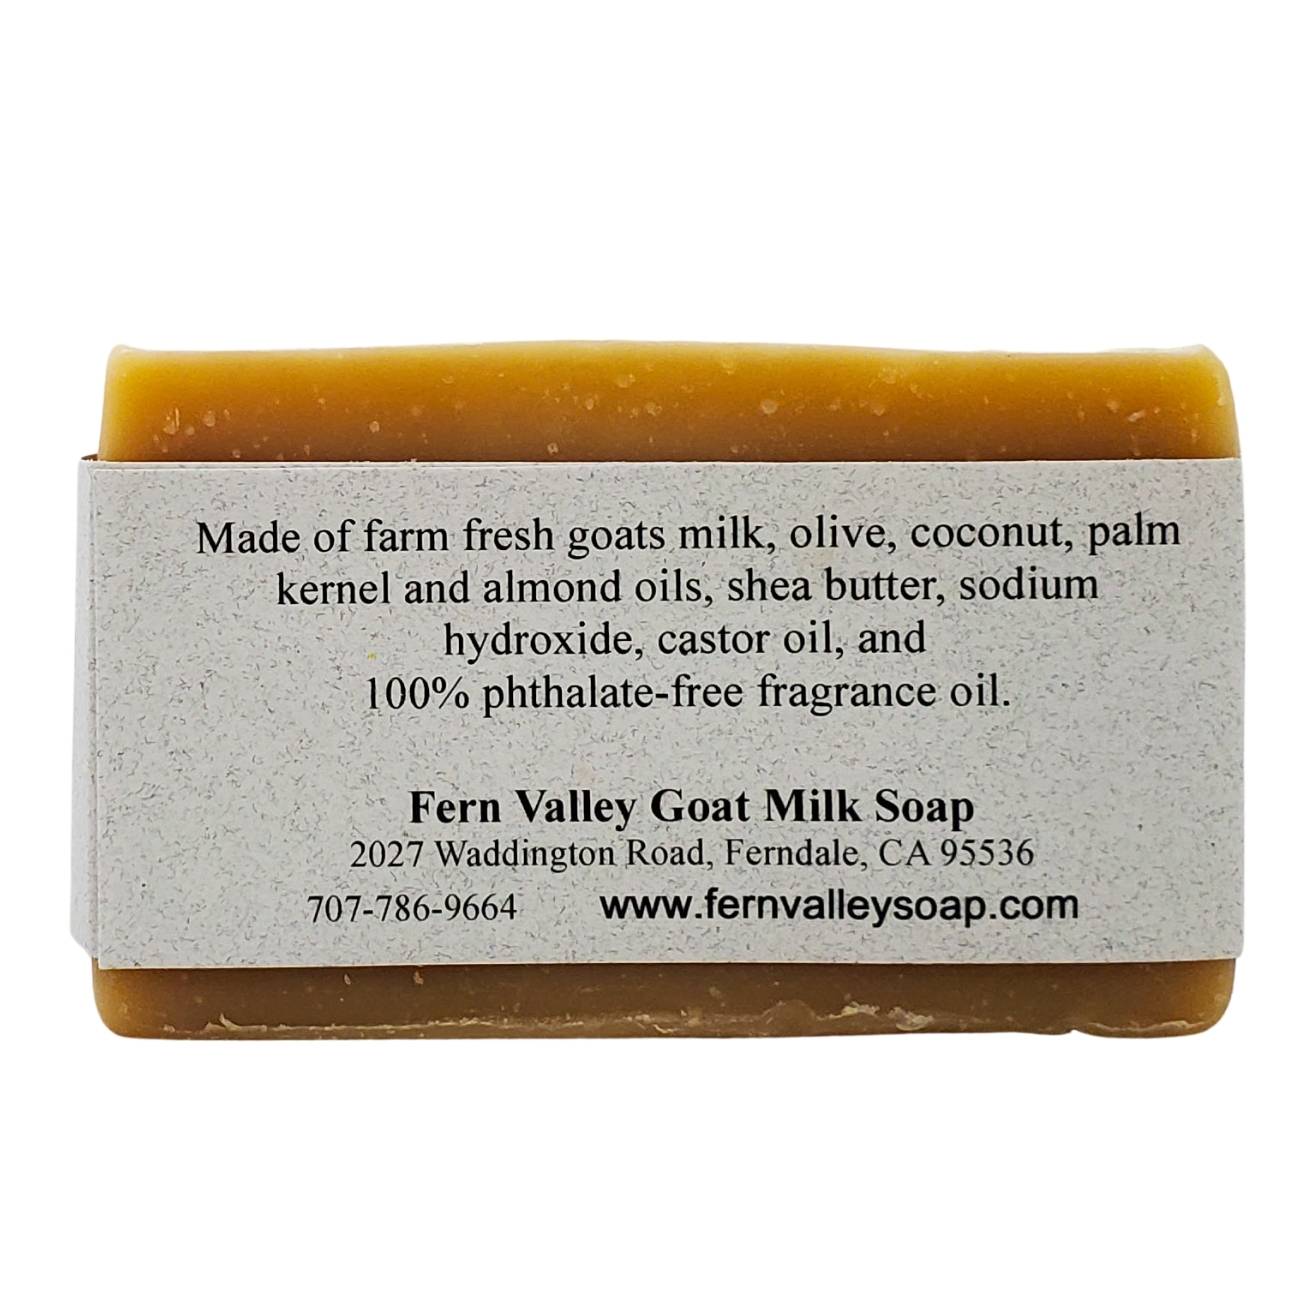 Natural Goat Milk Soap | Humboldt Hands Heavy-Duty Hand Cleaner | Original Woodsman